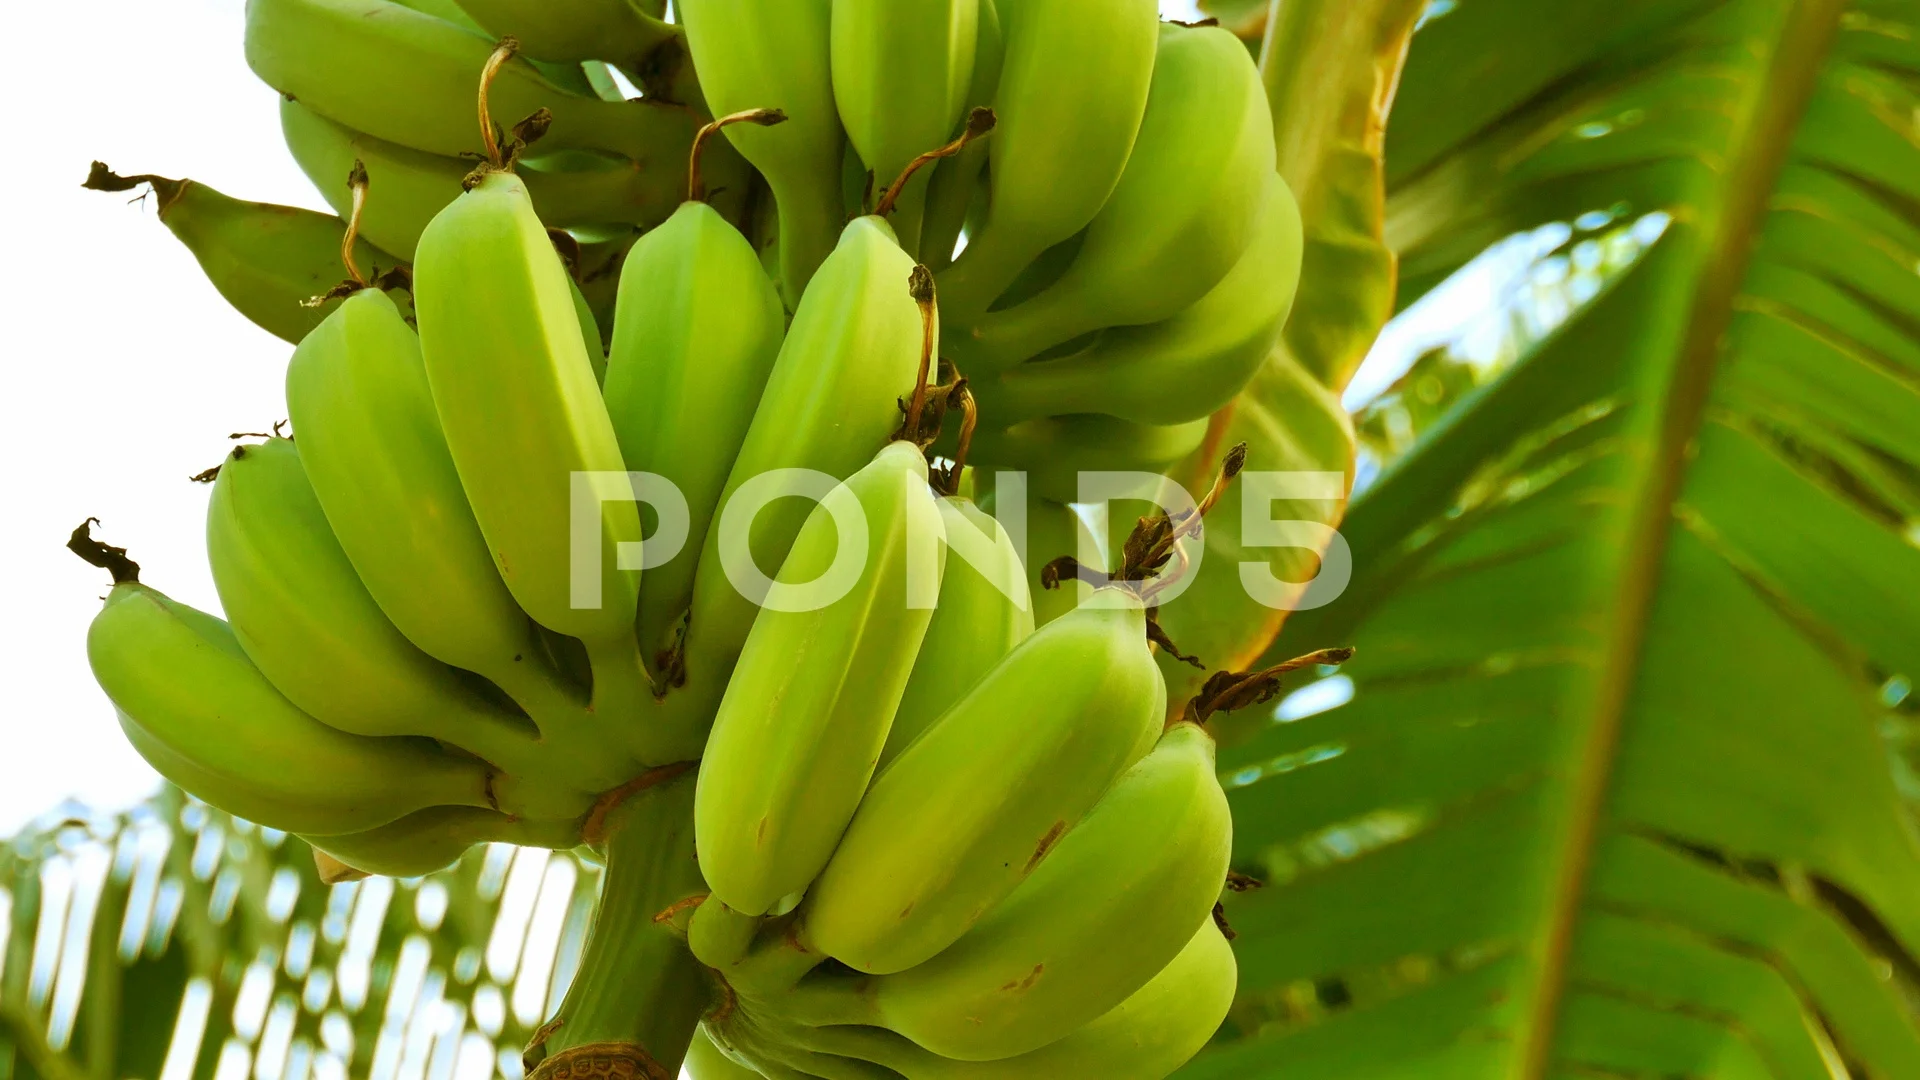 https://images.pond5.com/large-bunch-organic-bananas-banana-footage-076976825_prevstill.jpeg